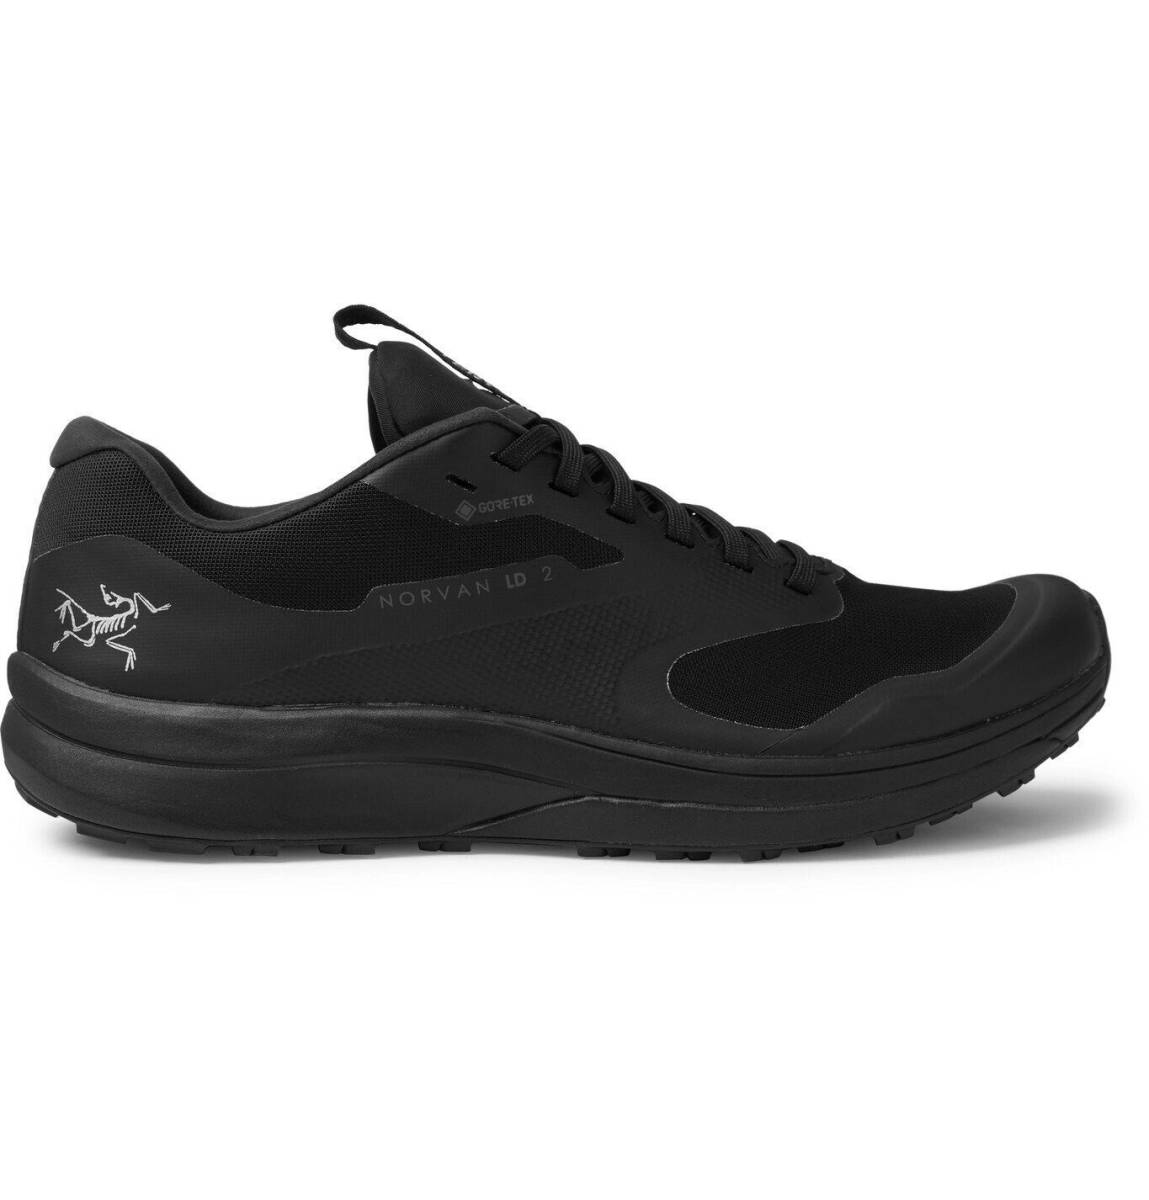 Arcteryx N9405* Men's ブラック Norvan LD 2 GTX Sneaker Shoes Size US 8 EU 40 海外 即決 - 4